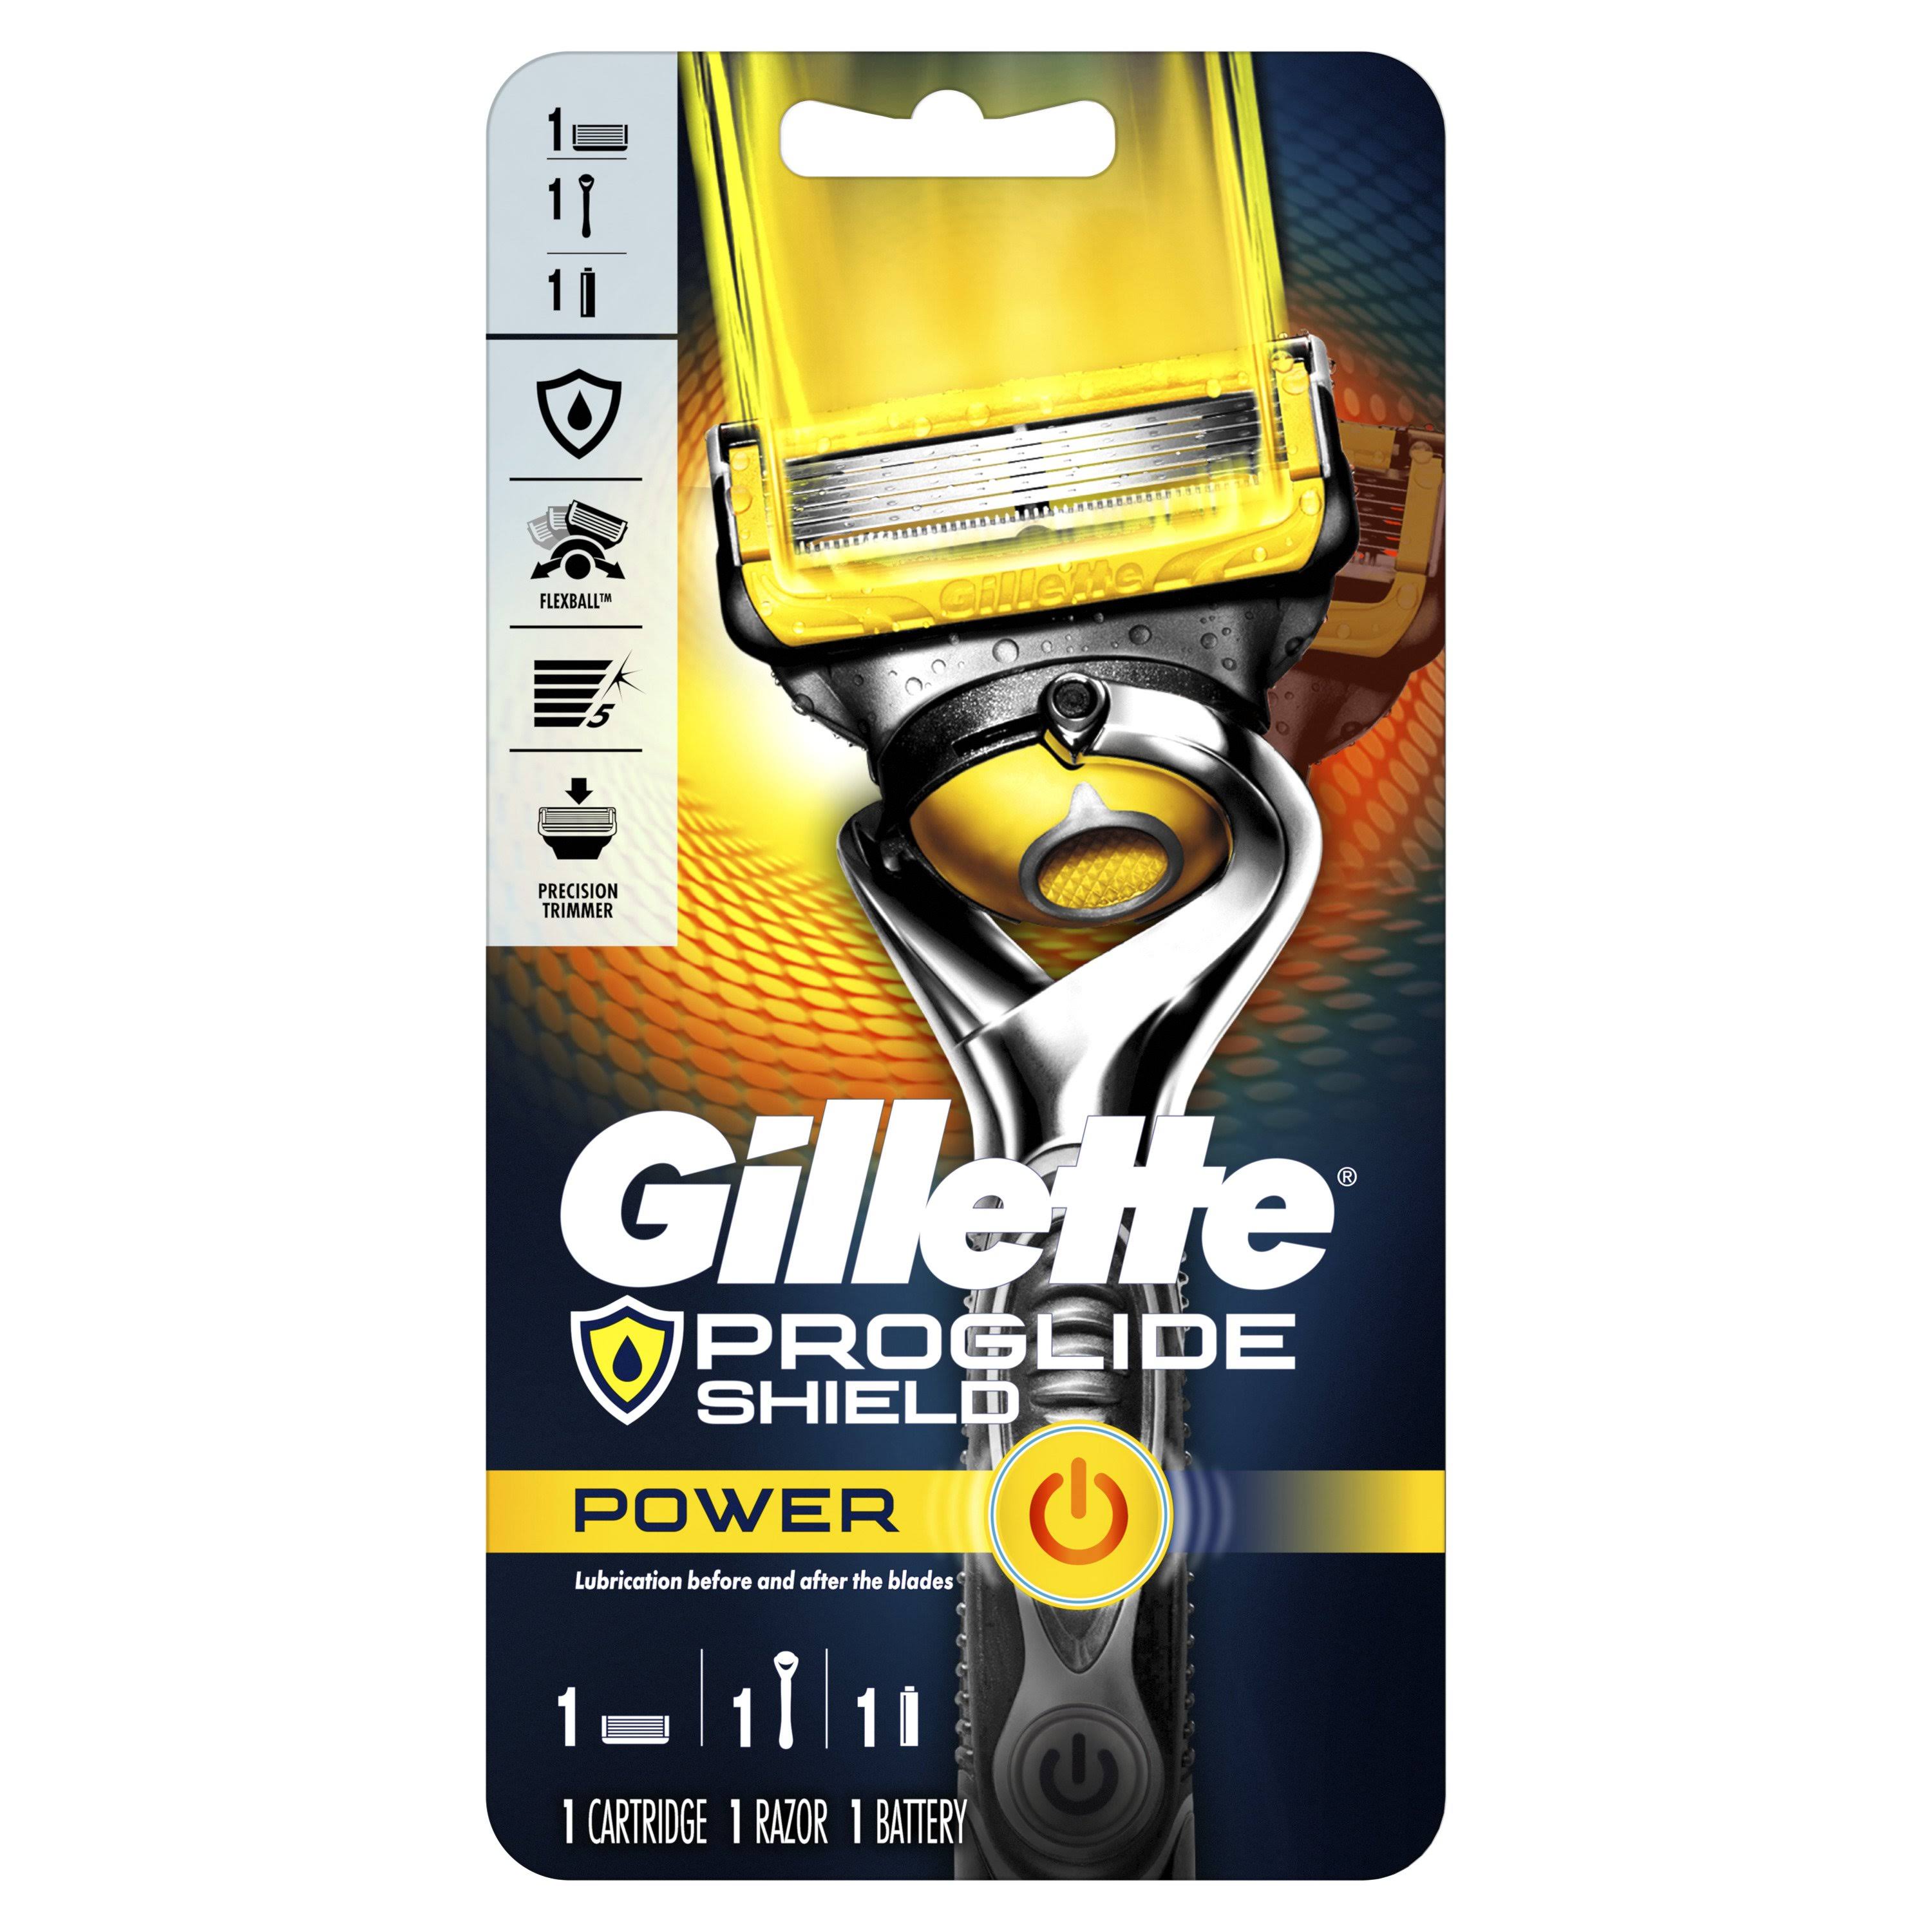 Gillette Fusion5 Proshield Men's Razor Kit